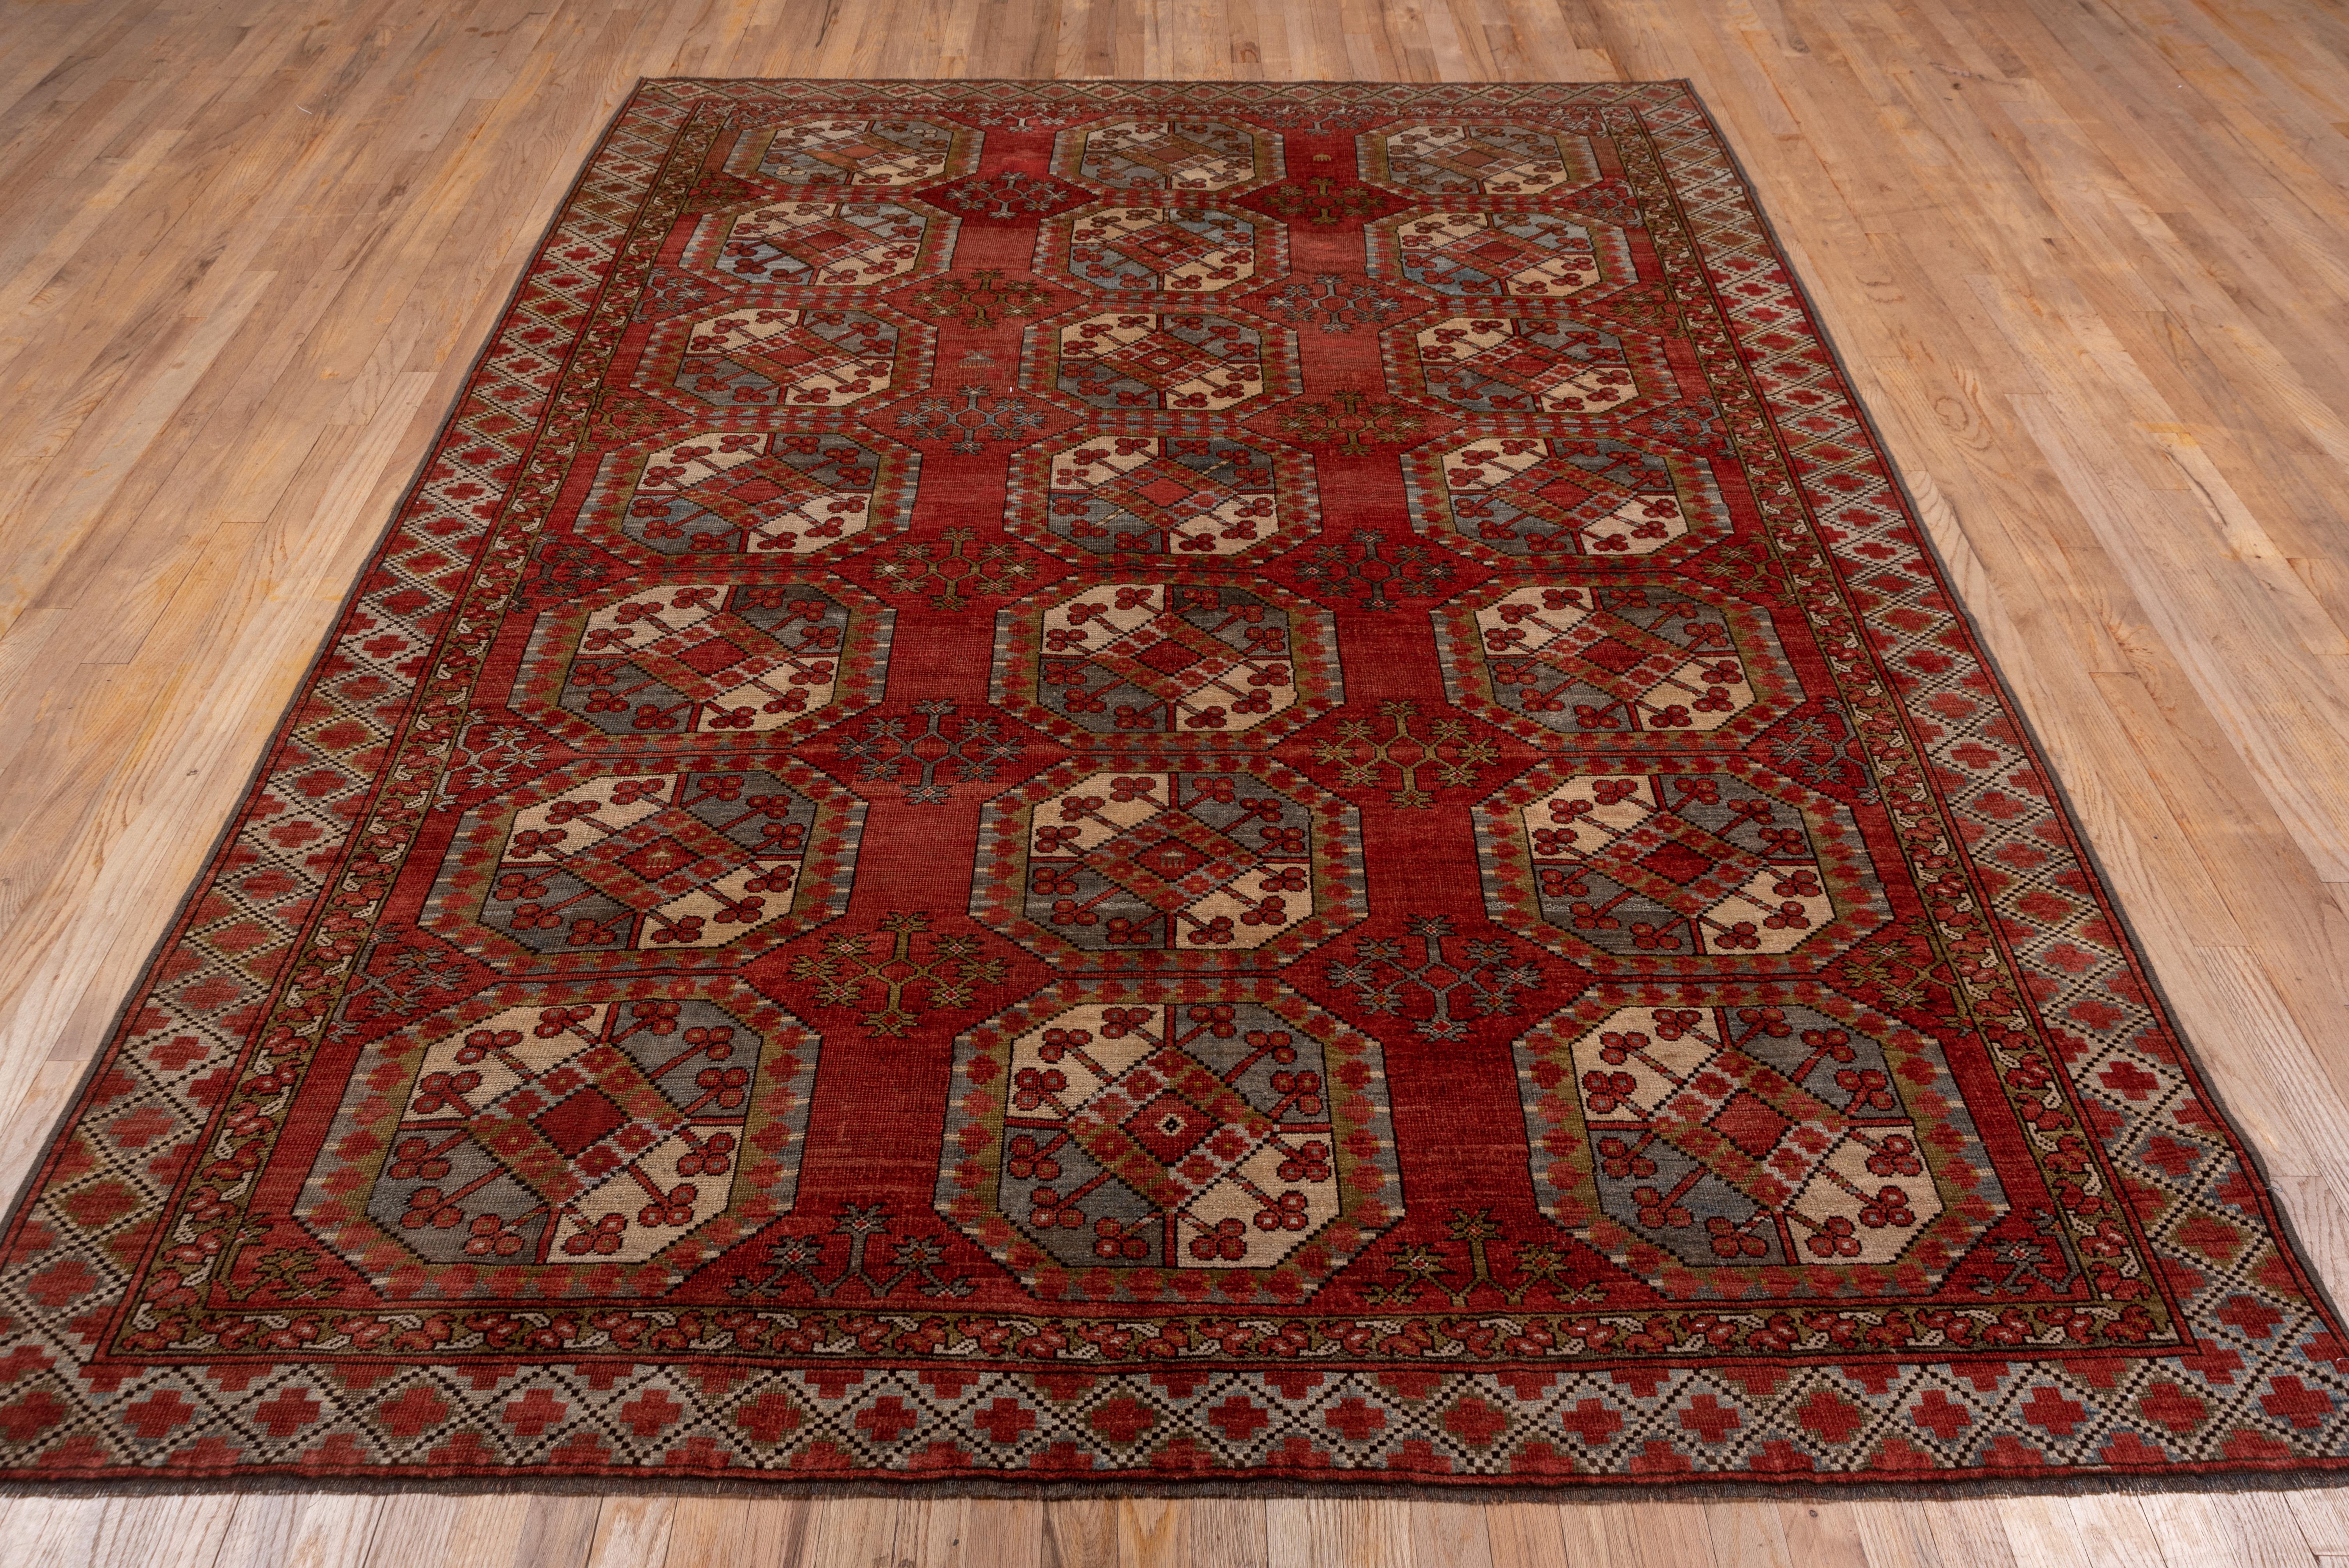 Tribal Antique Afghan Ersari Carpet, Red Field, Allover Field